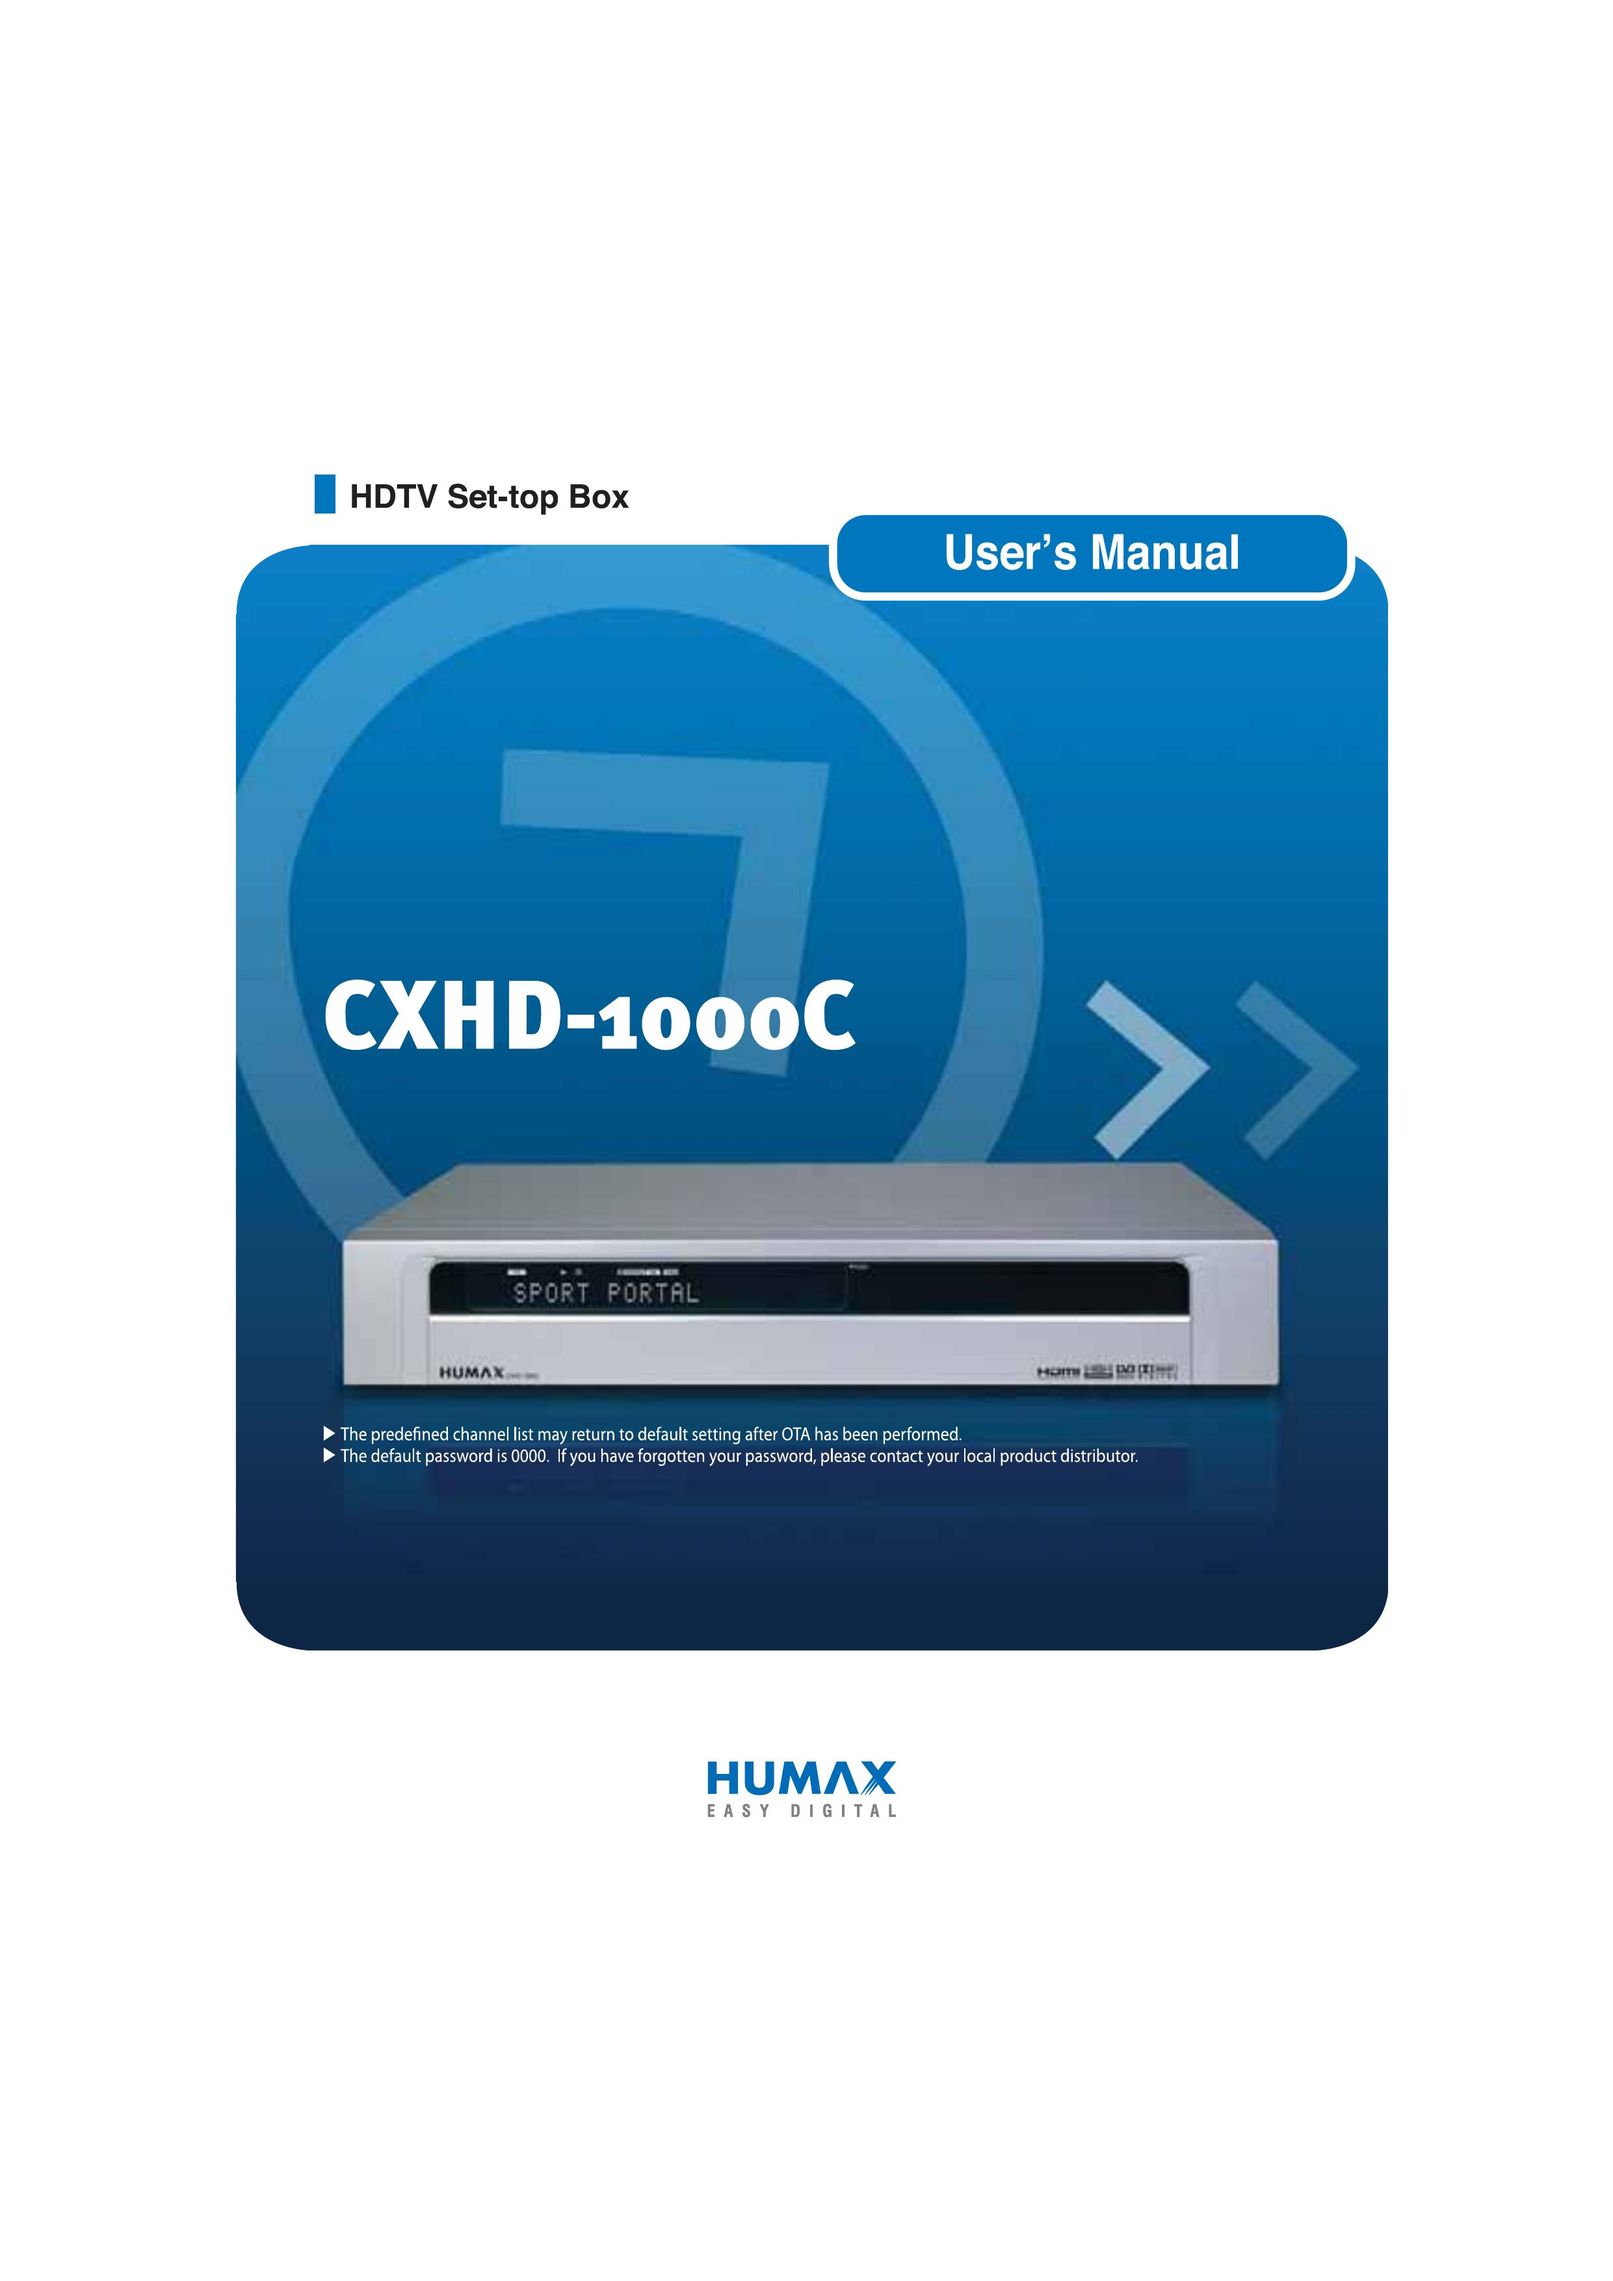 Humax CXHD-1000C Satellite TV System User Manual